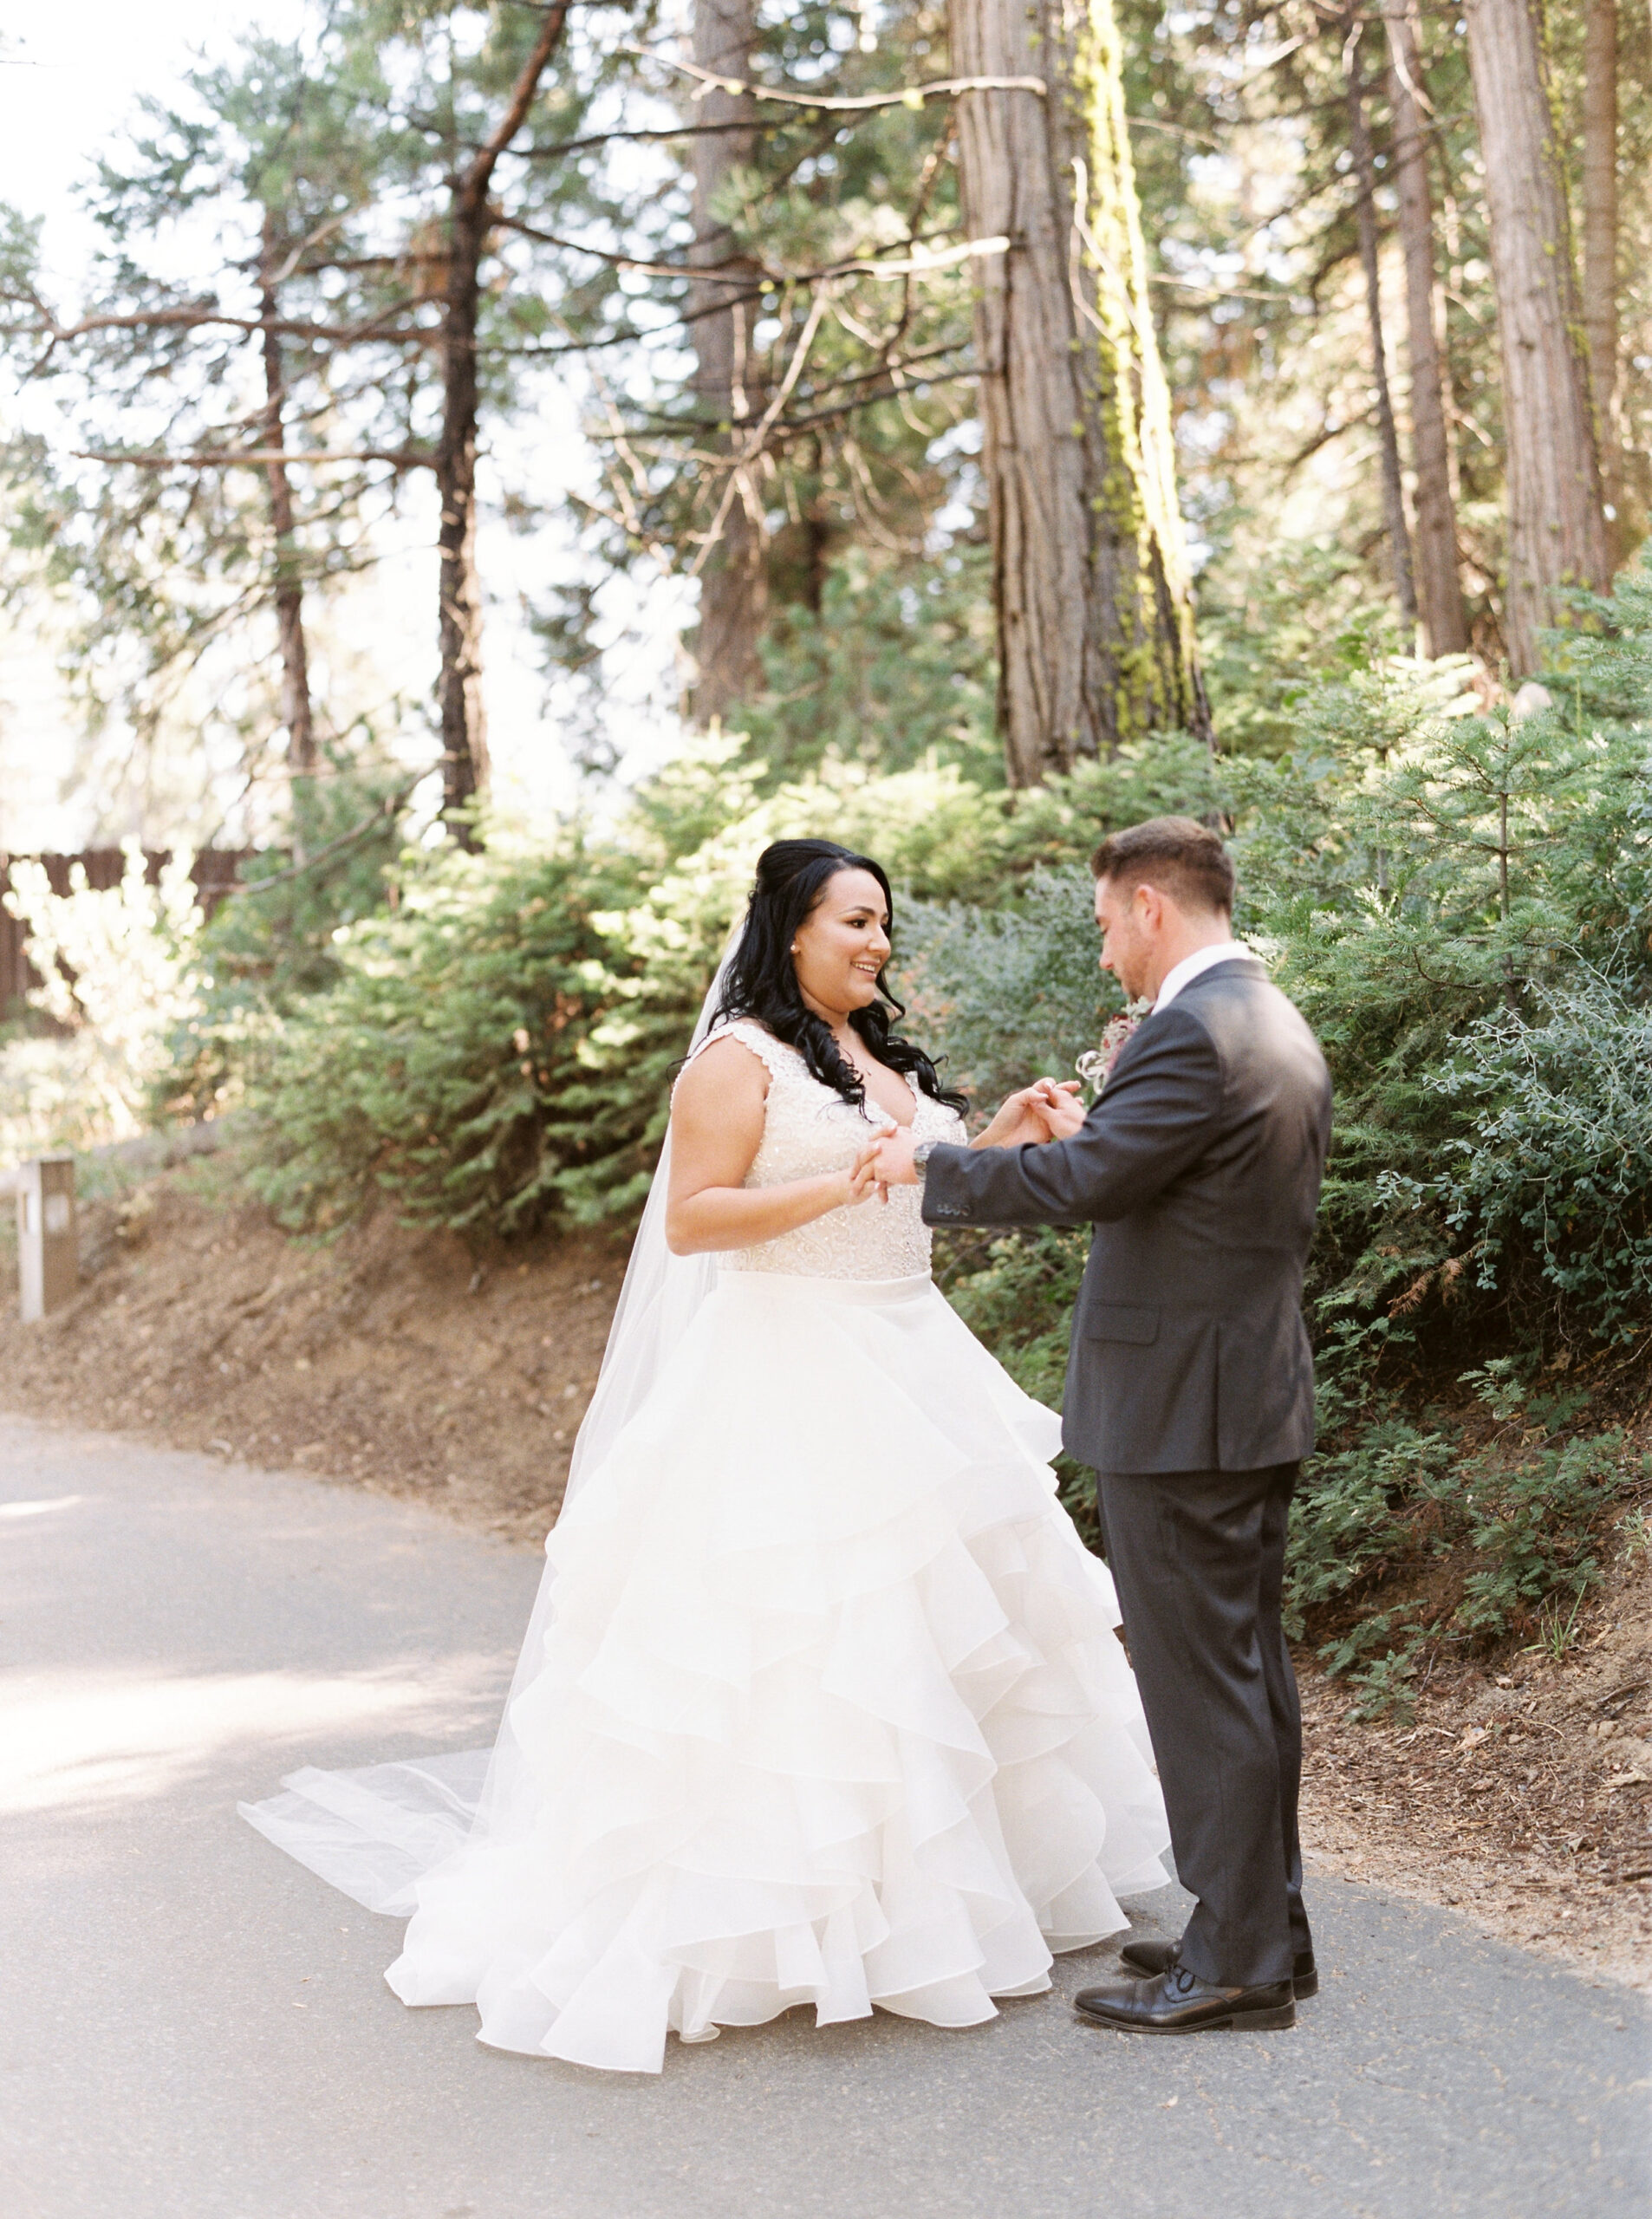 Tenaya-lodge-wedding-at-yosemite-national-park-california-64.jpg